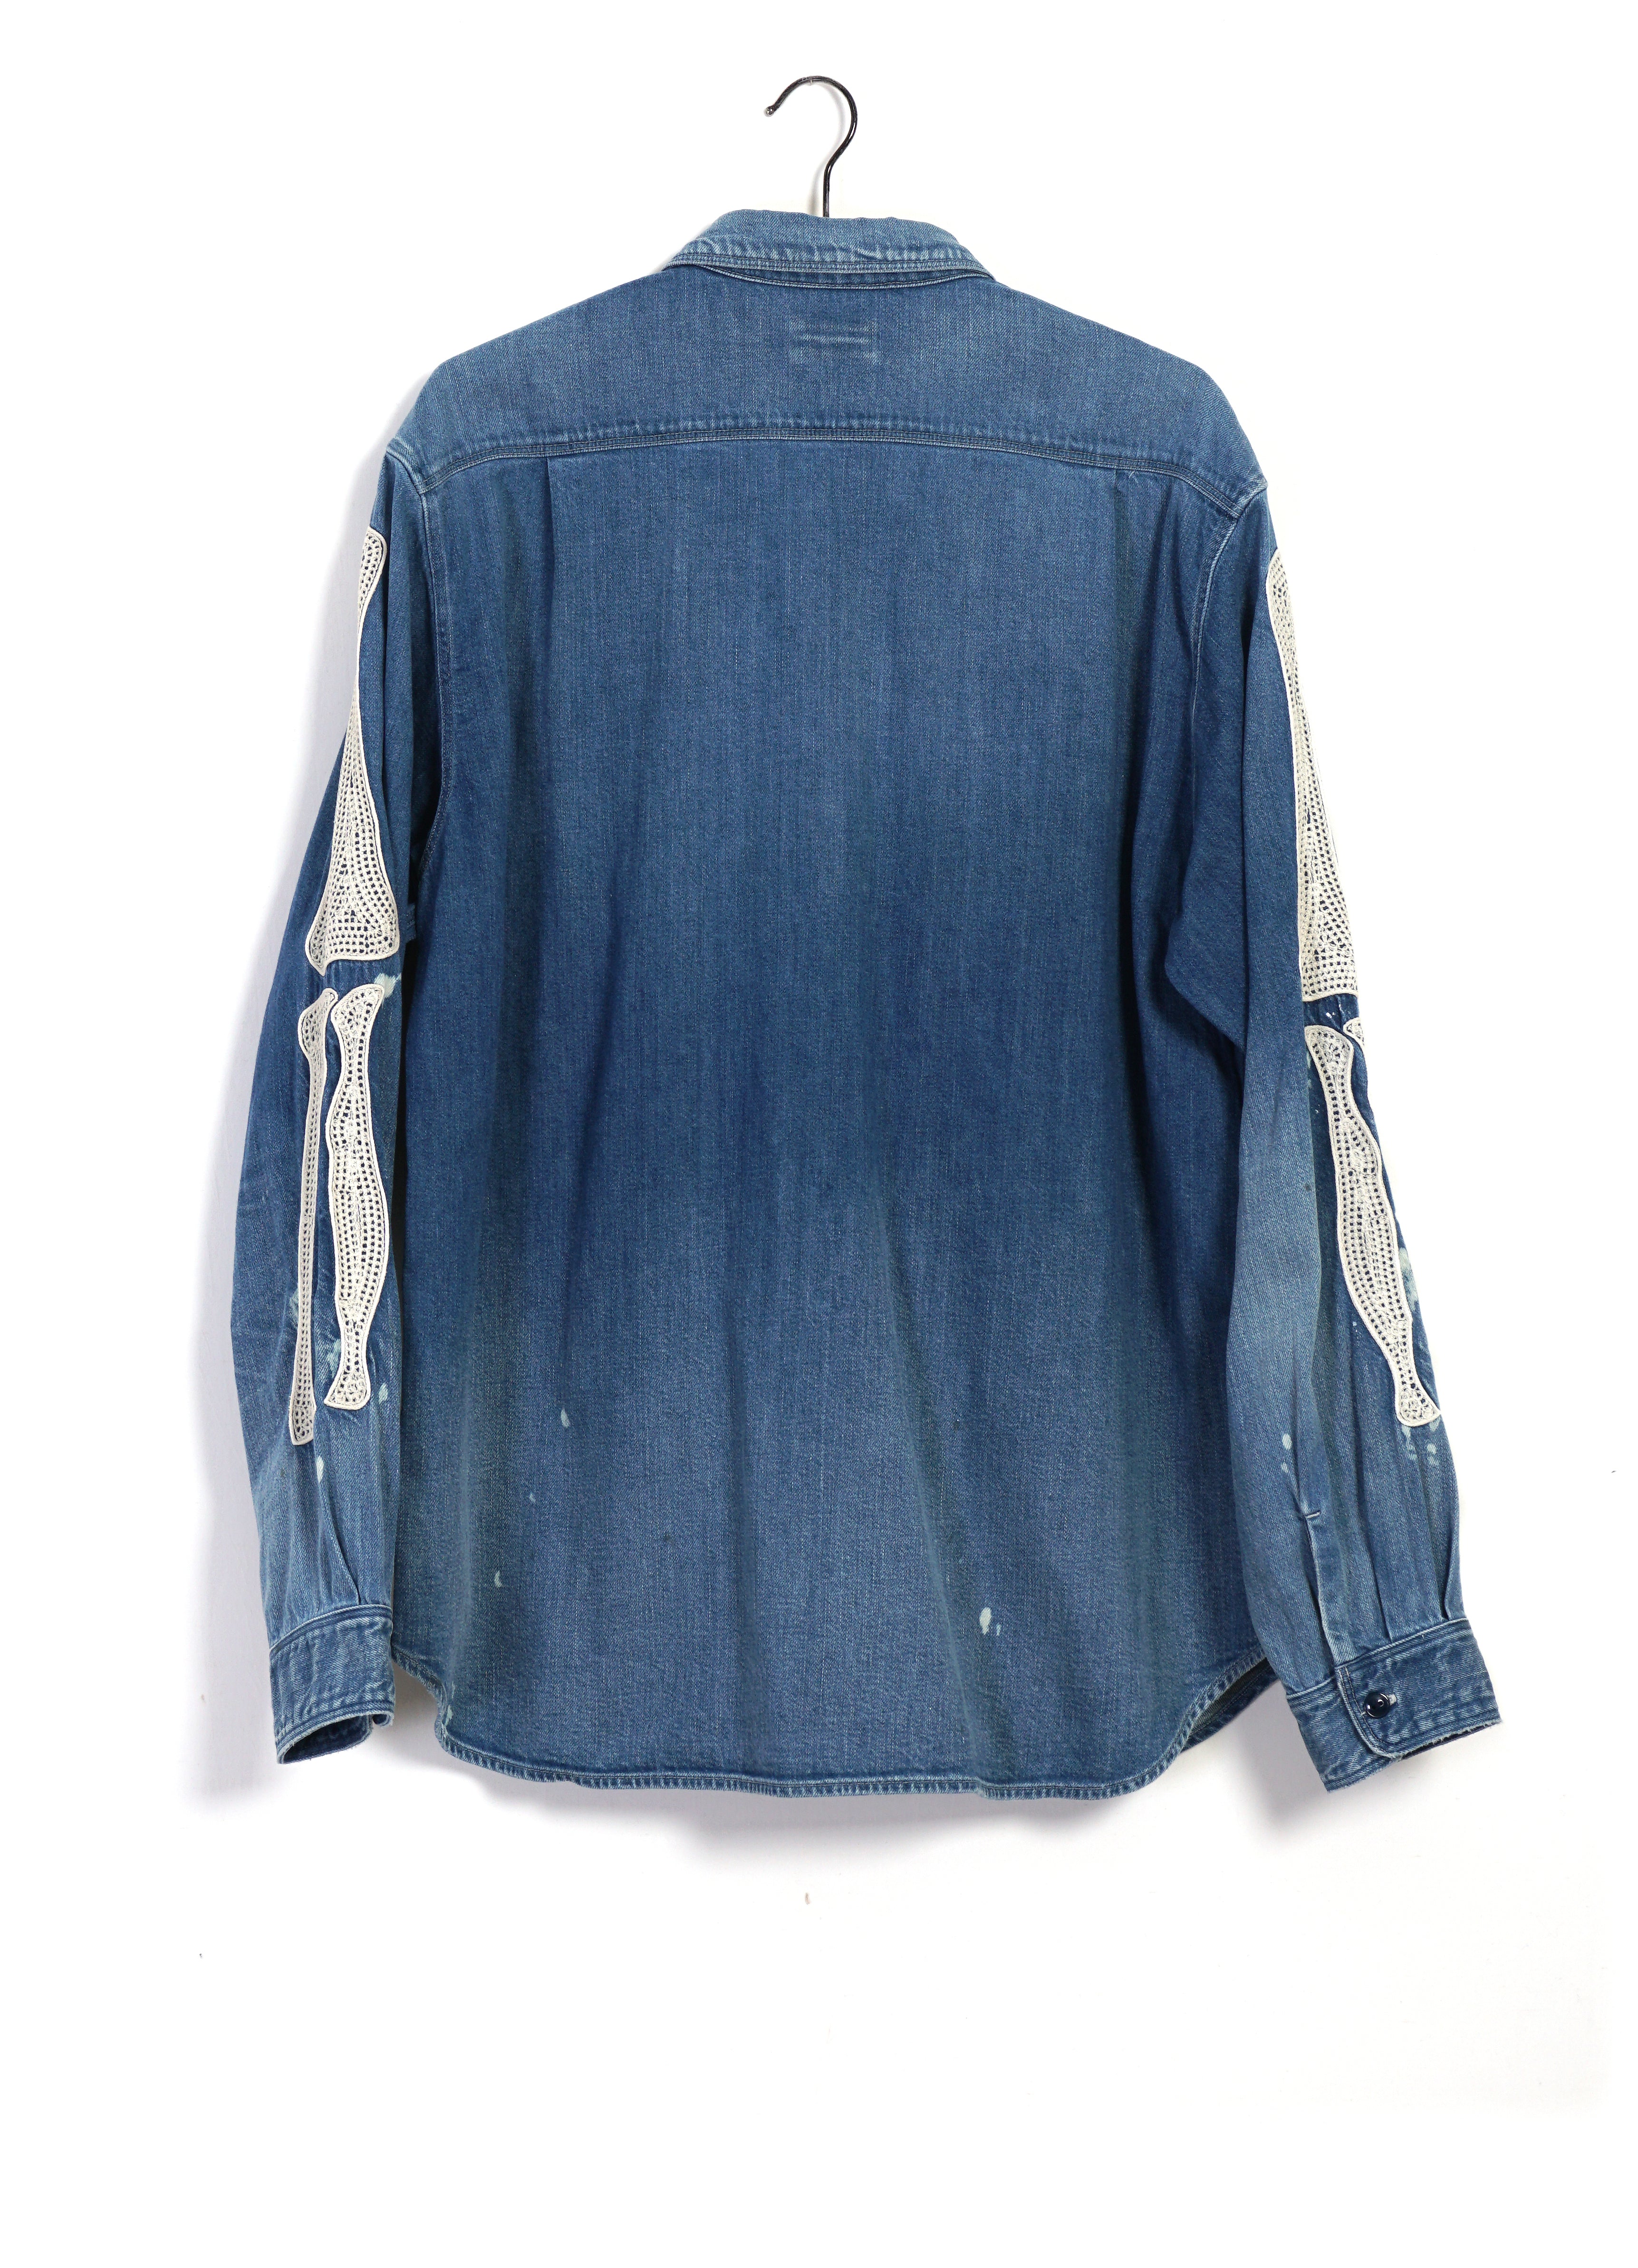 BONE SHIRT | 8oz Embroidered Work Shirt | Processed Indigo